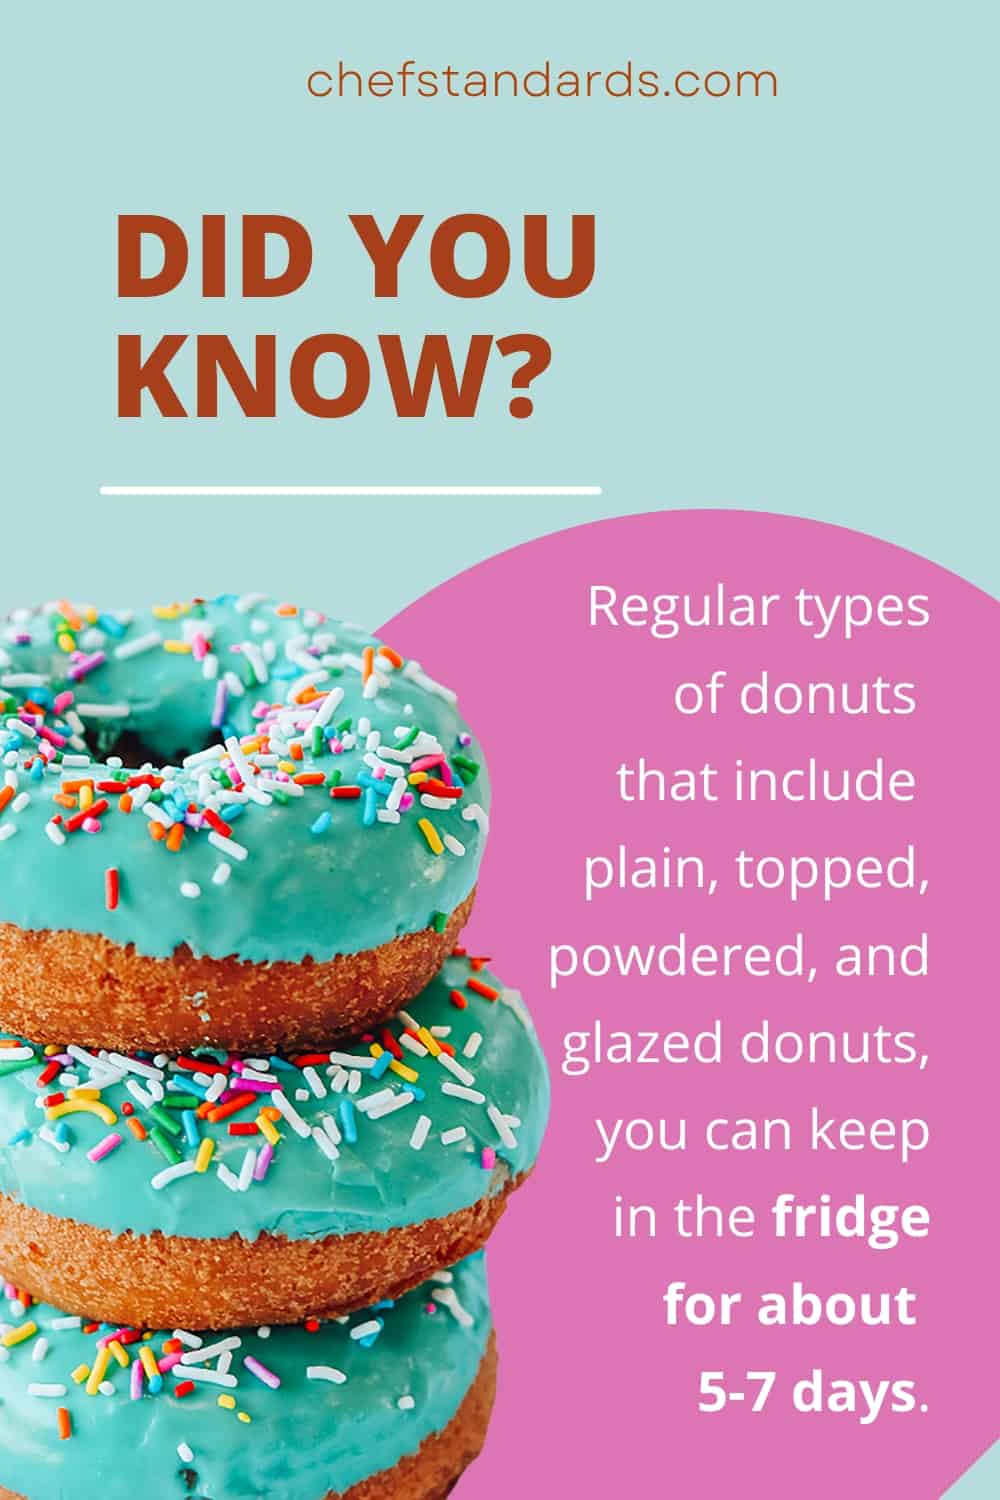 storage of regular types of donuts